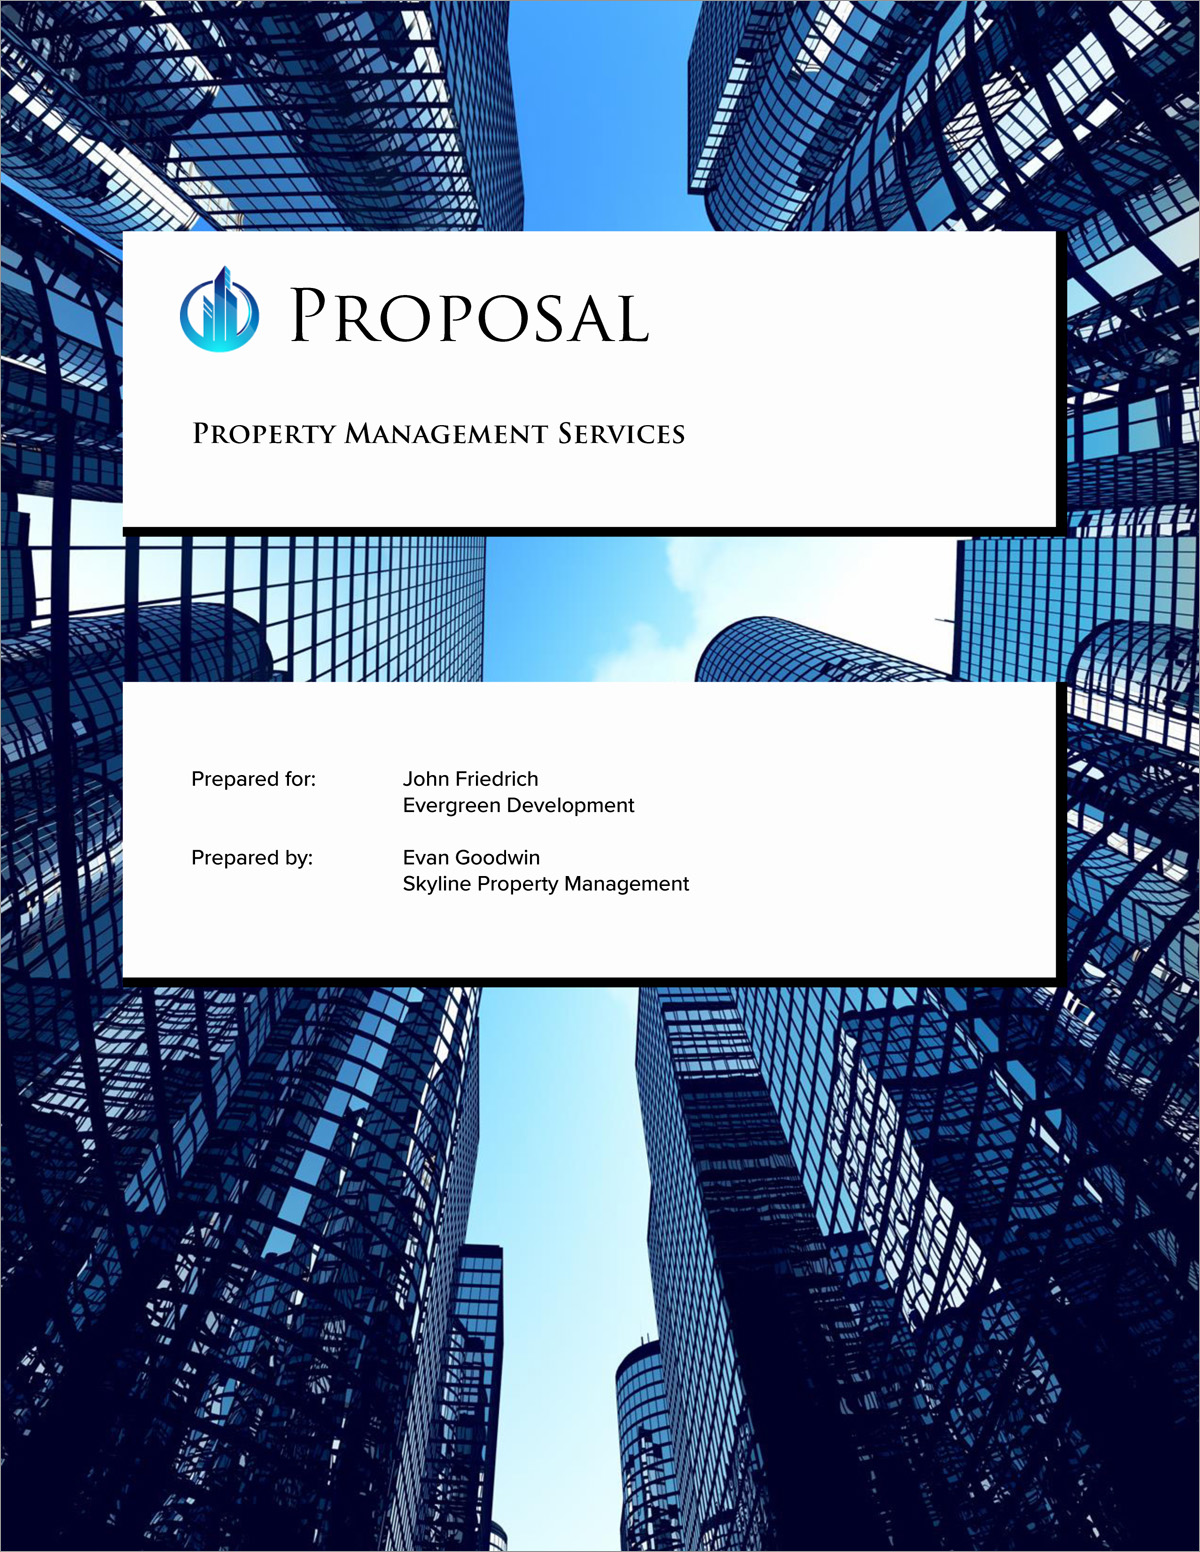 Property Management Services Proposal 5 Steps